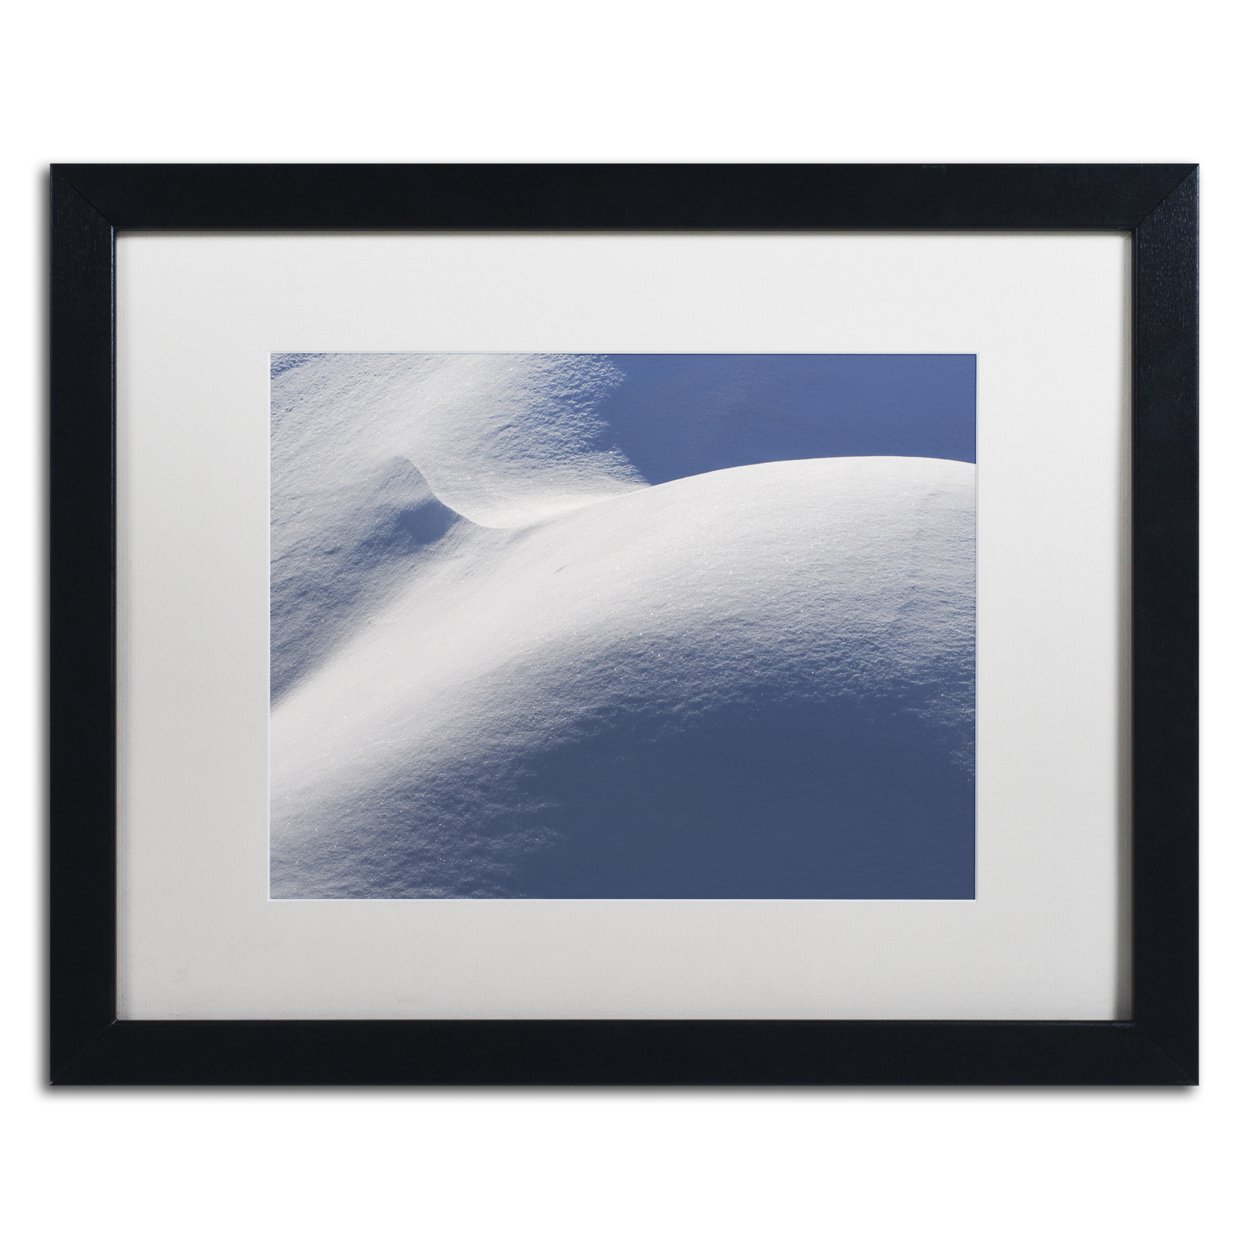 Kurt Shaffer 'Abstract Snow Mound 3' Black Wooden Framed Art 18 X 22 Inches